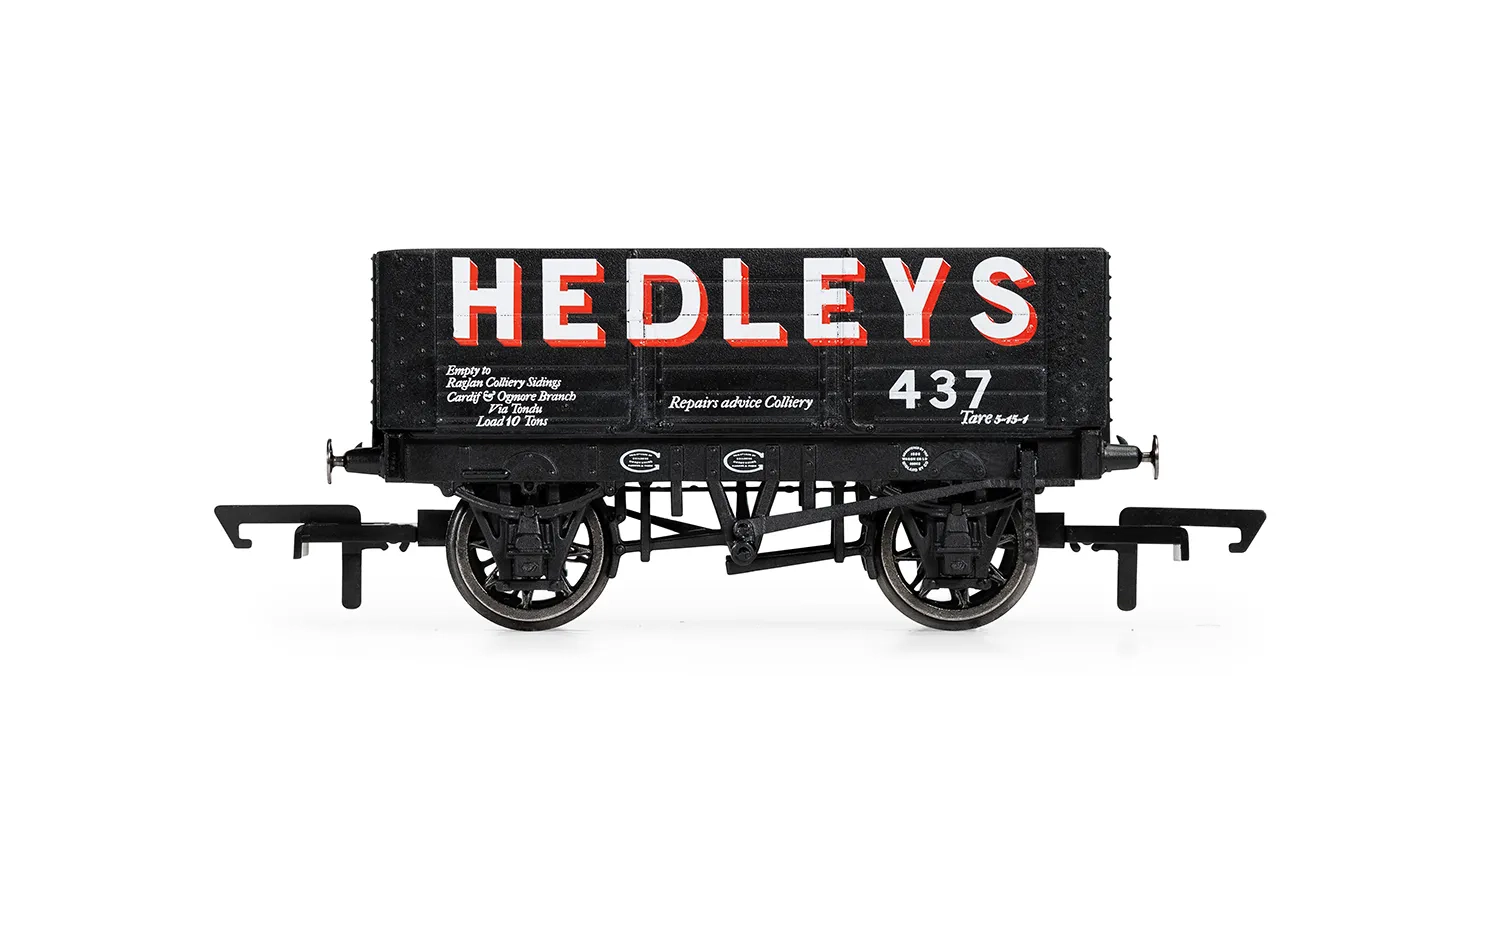 6 Plank Wagon, Hedleys - Era 3